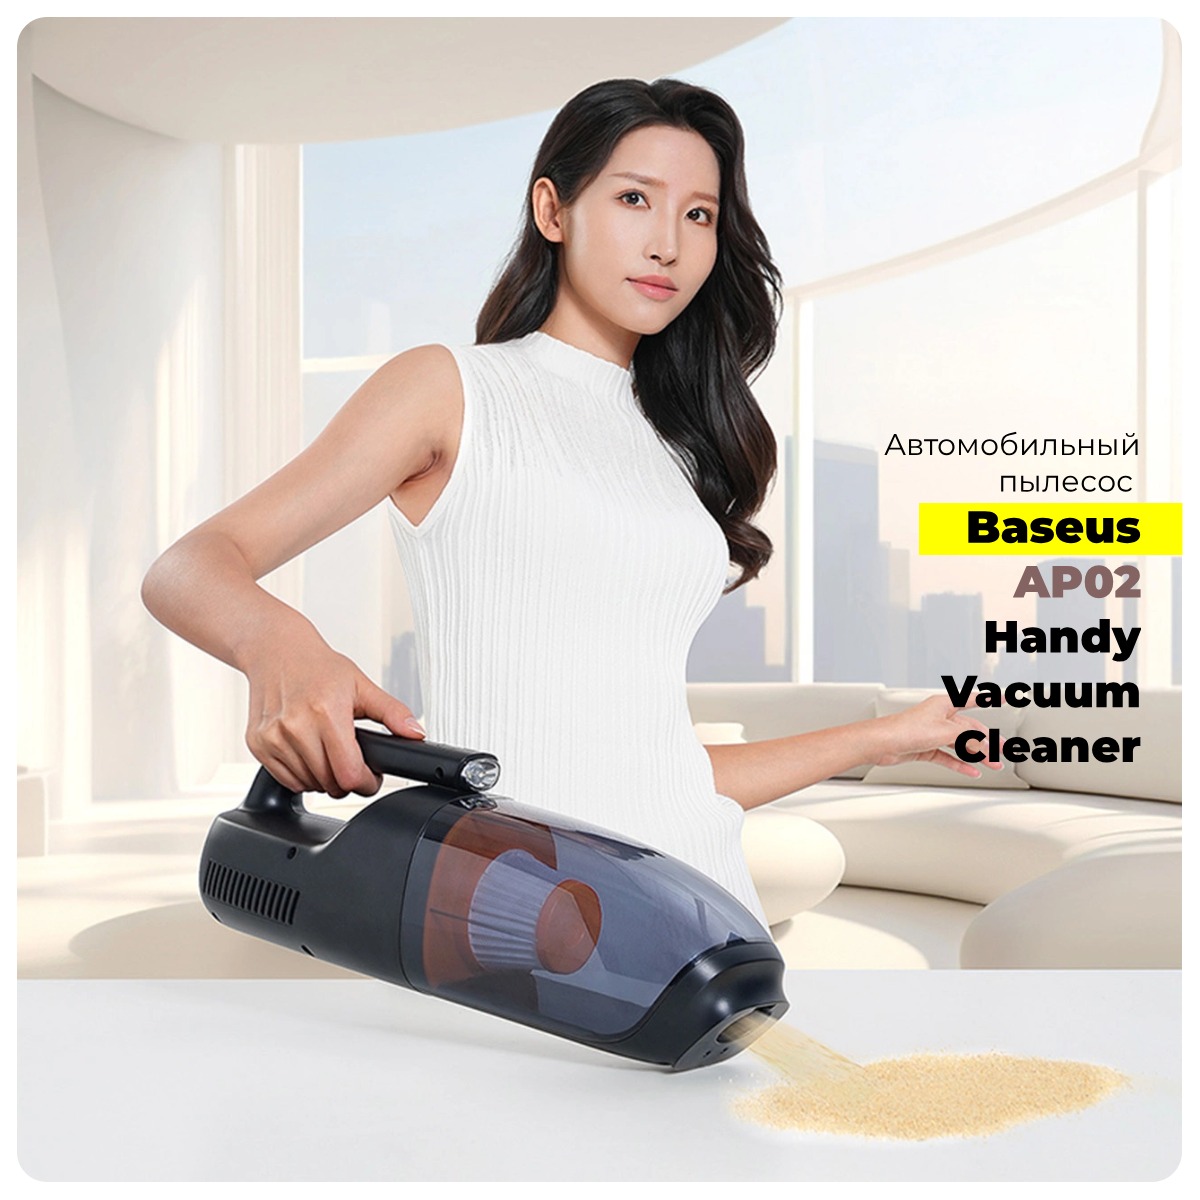 Baseus-AP02-Handy-Vacuum-Cleaner-01